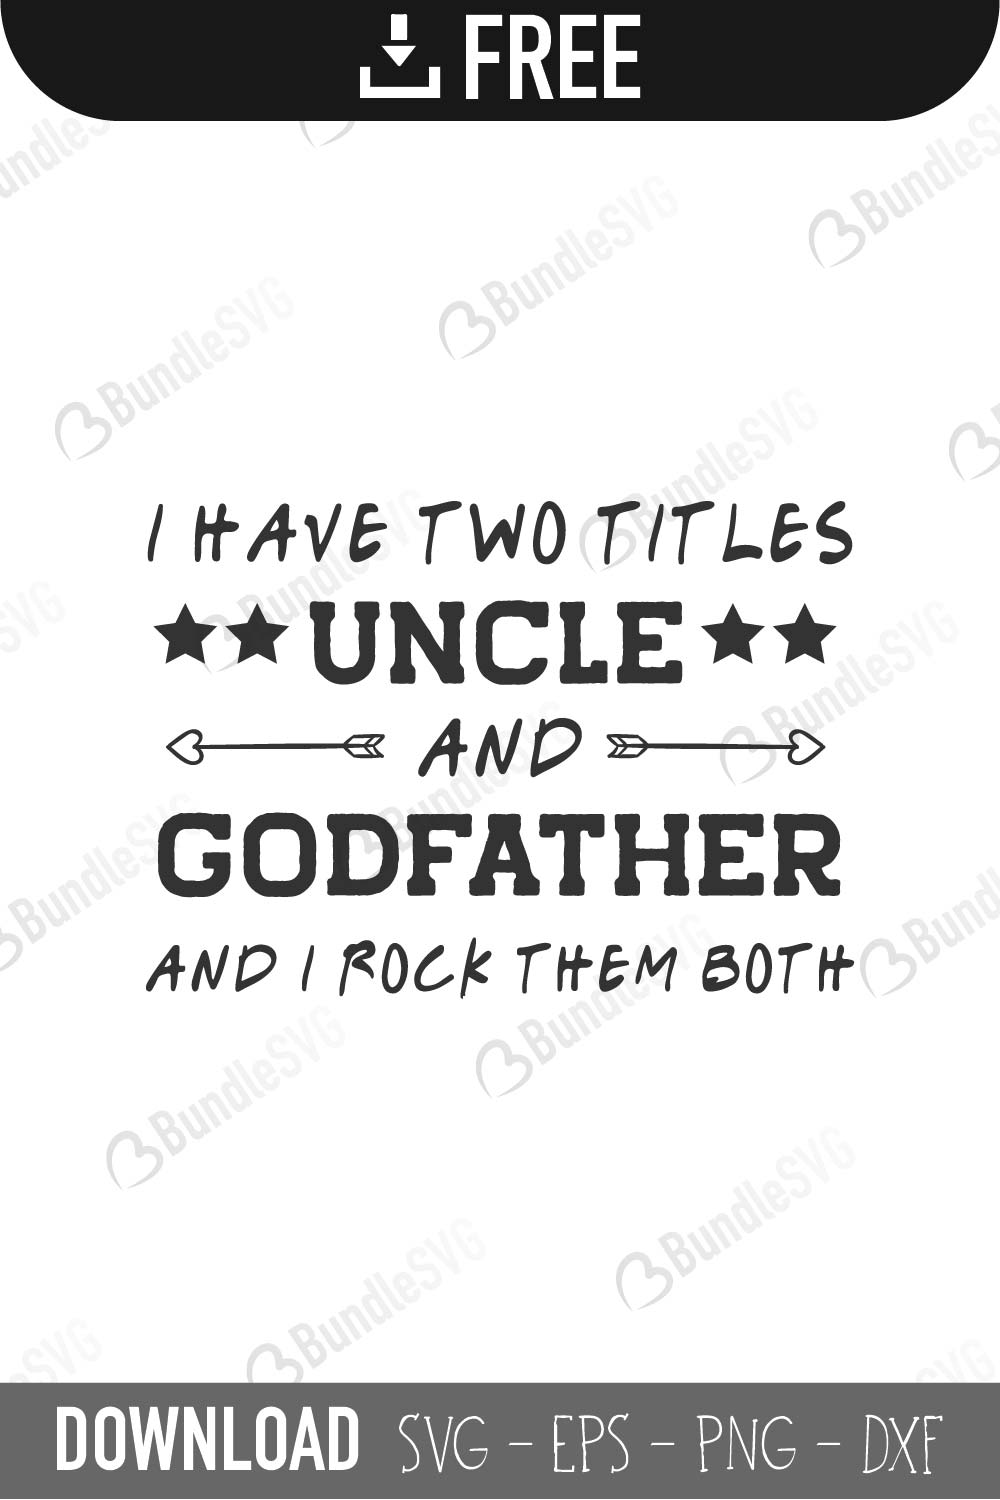 Godfather And I Rock Them Both Svg Cut Files Free Download Bundlesvg